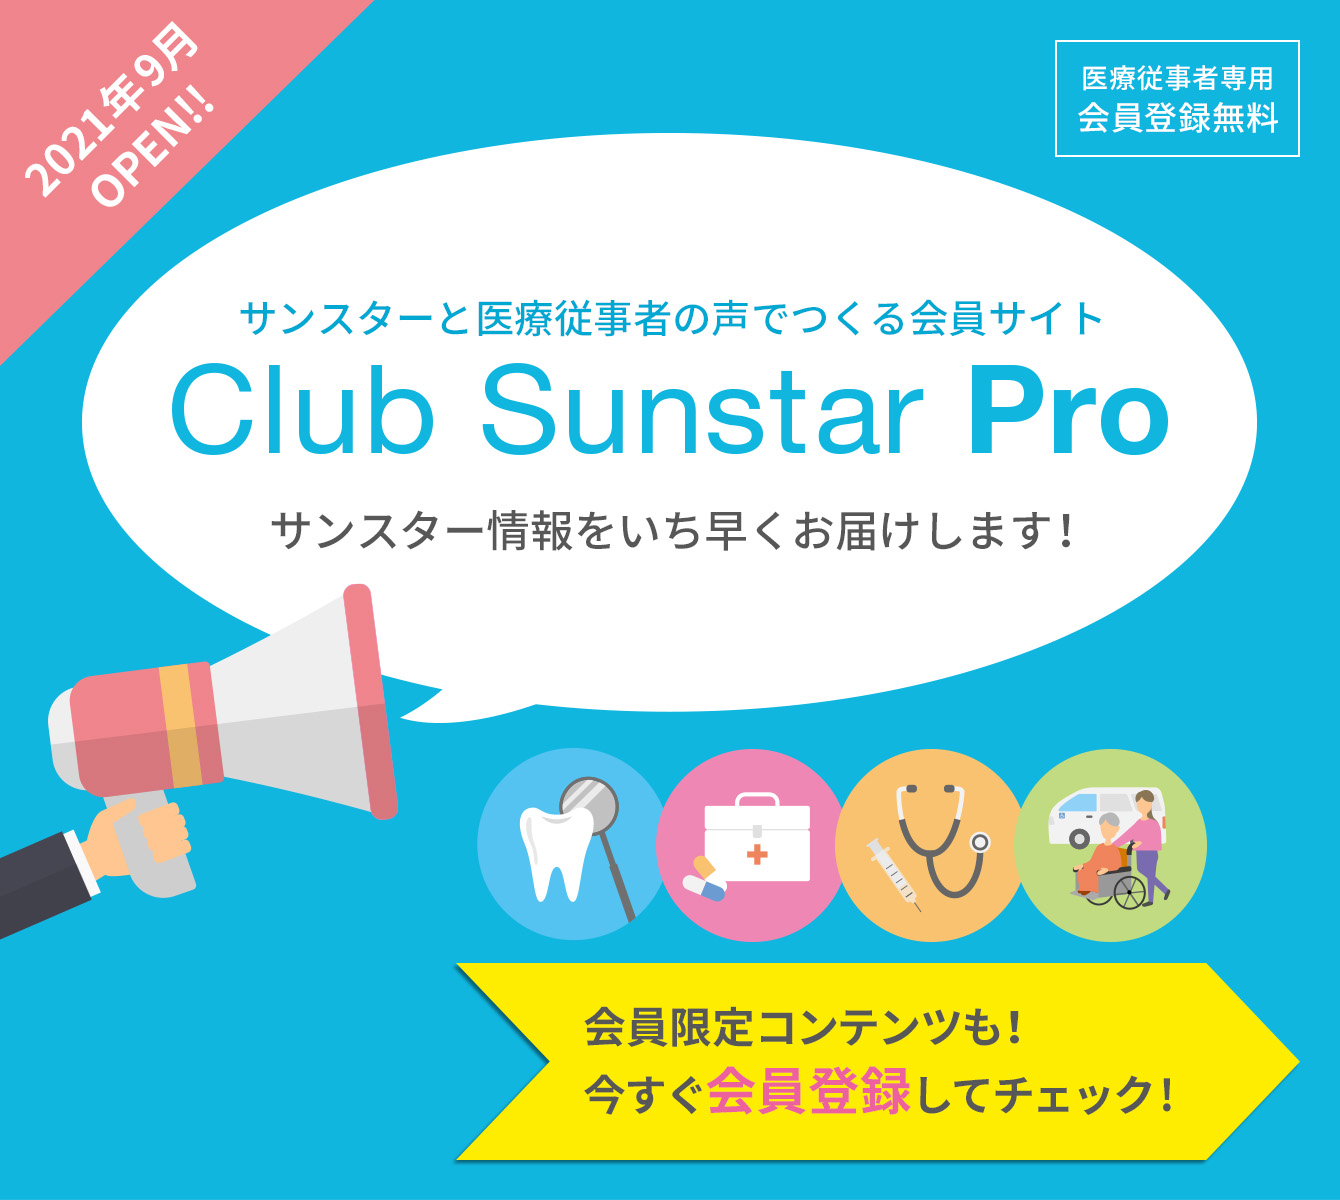 Club Sunstar Pro